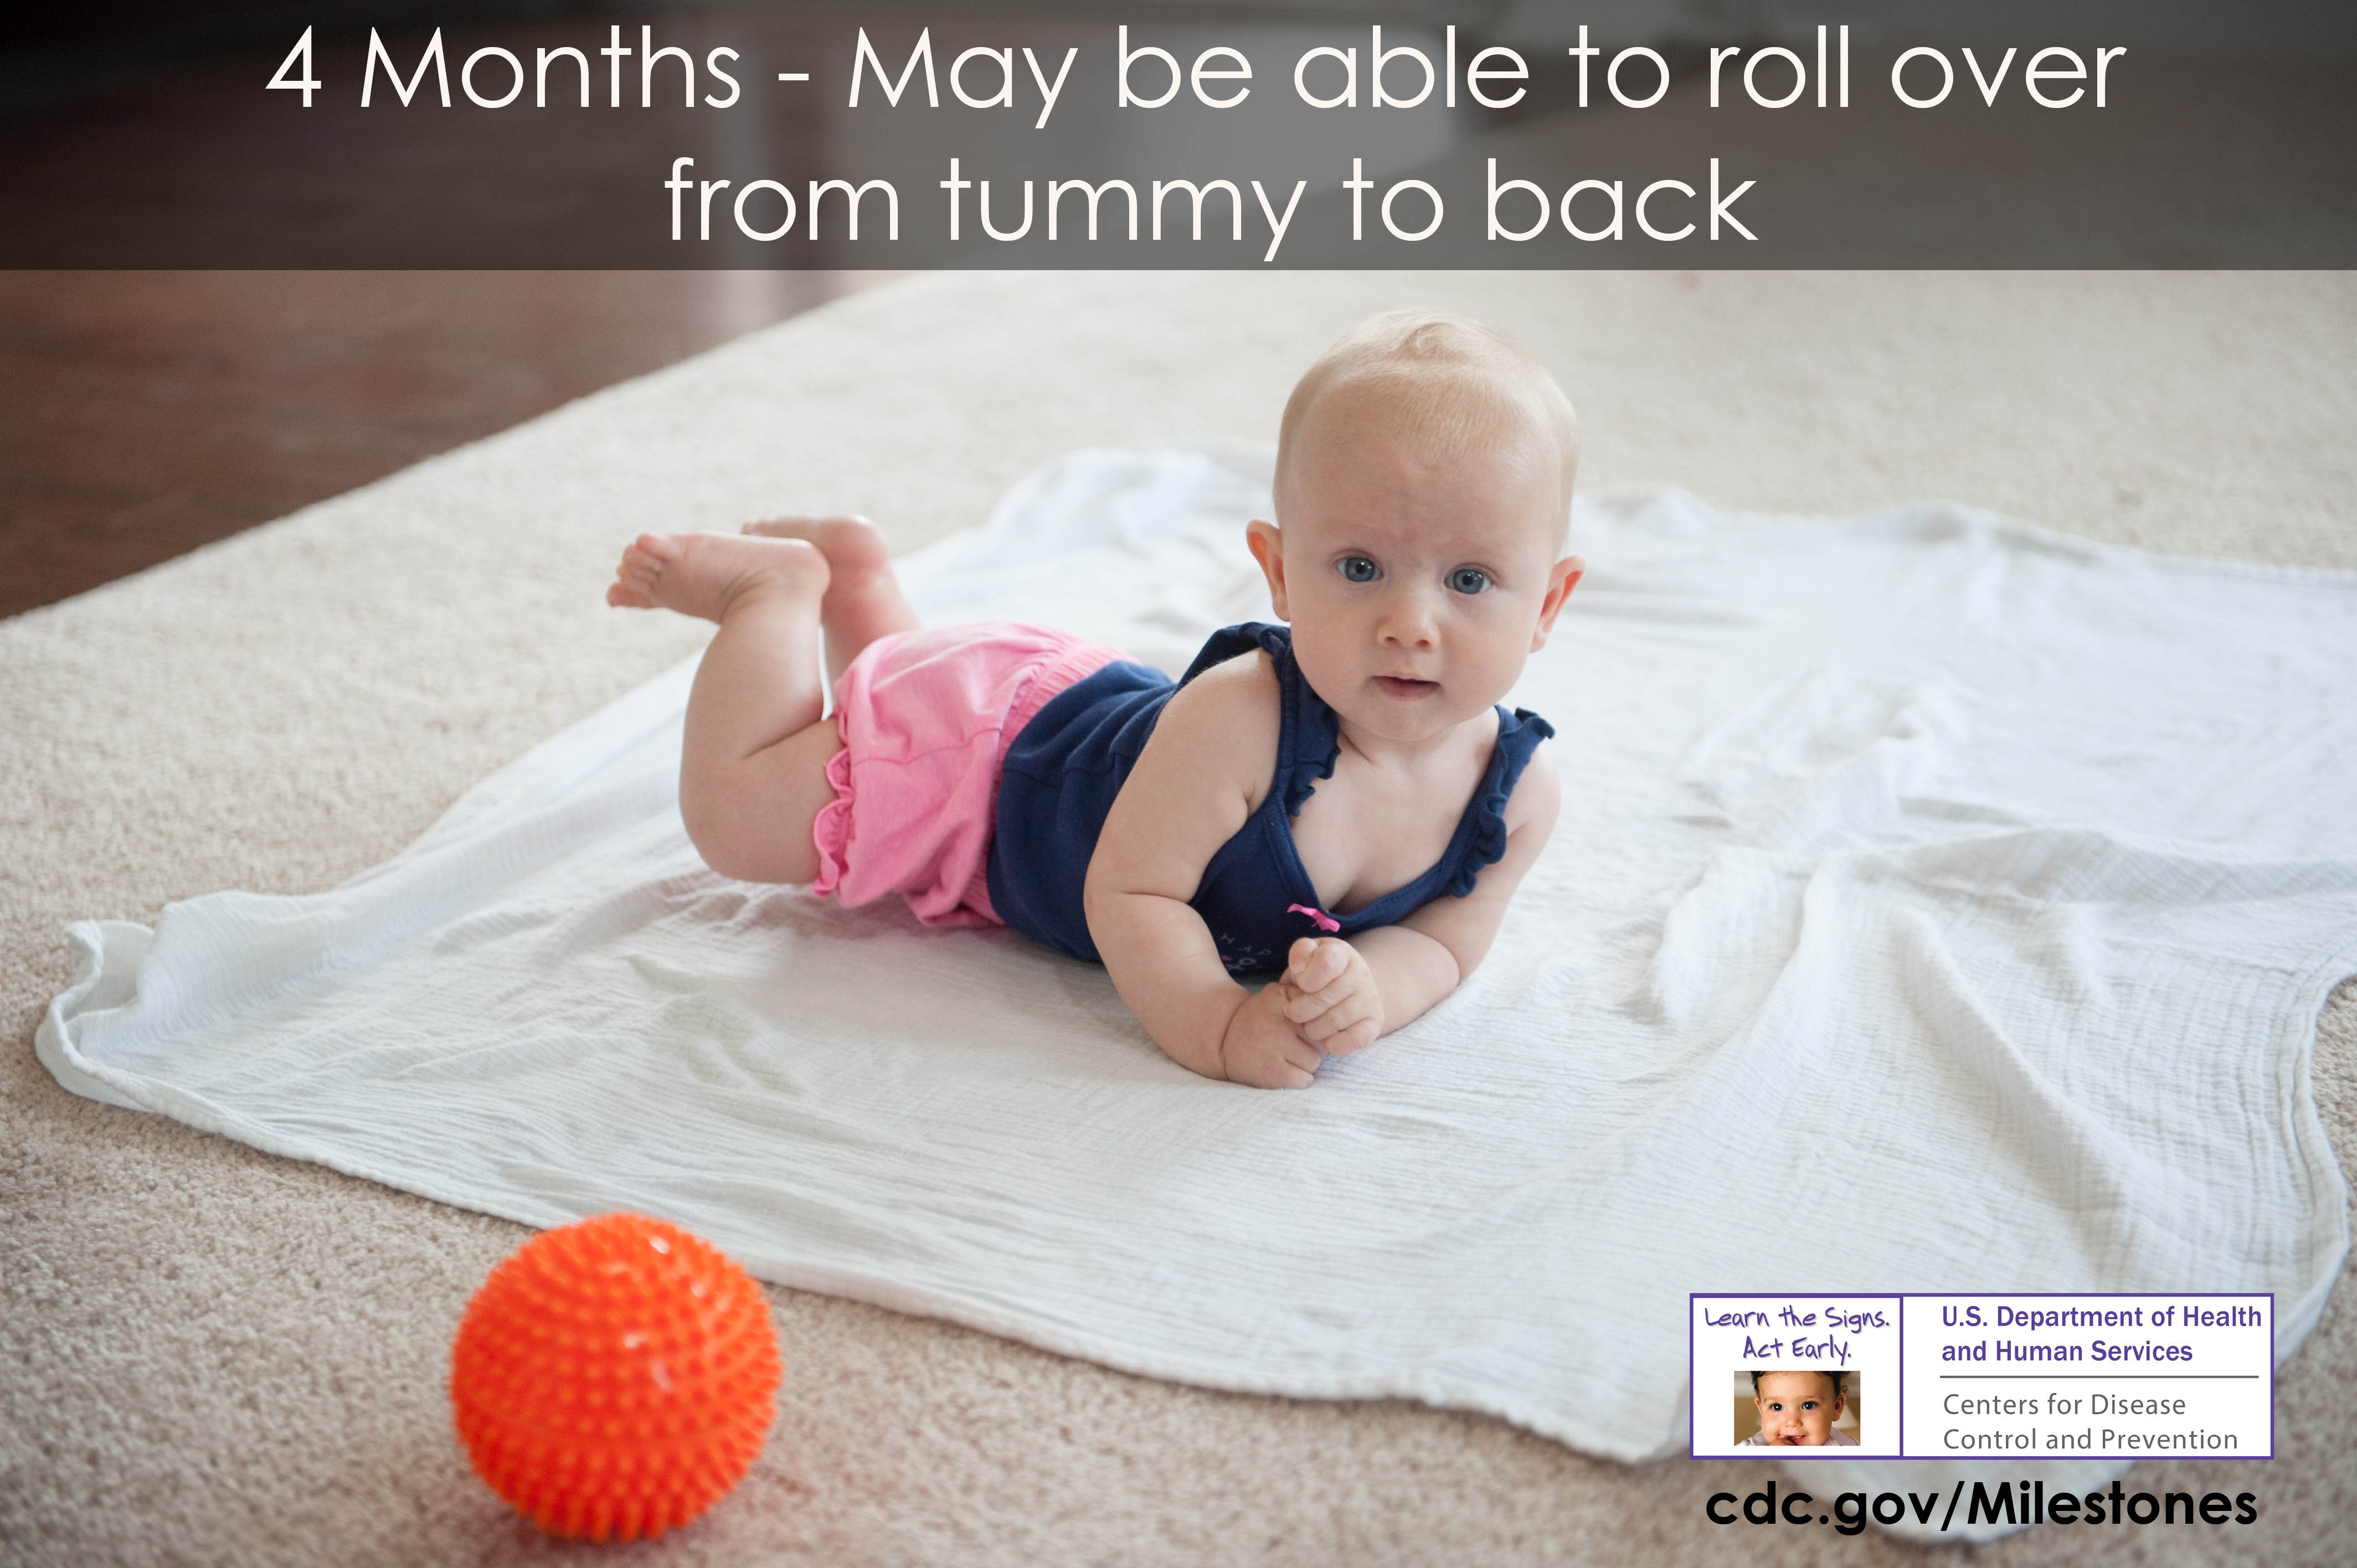 Babycenter Milestone Chart 13 To 18 Months